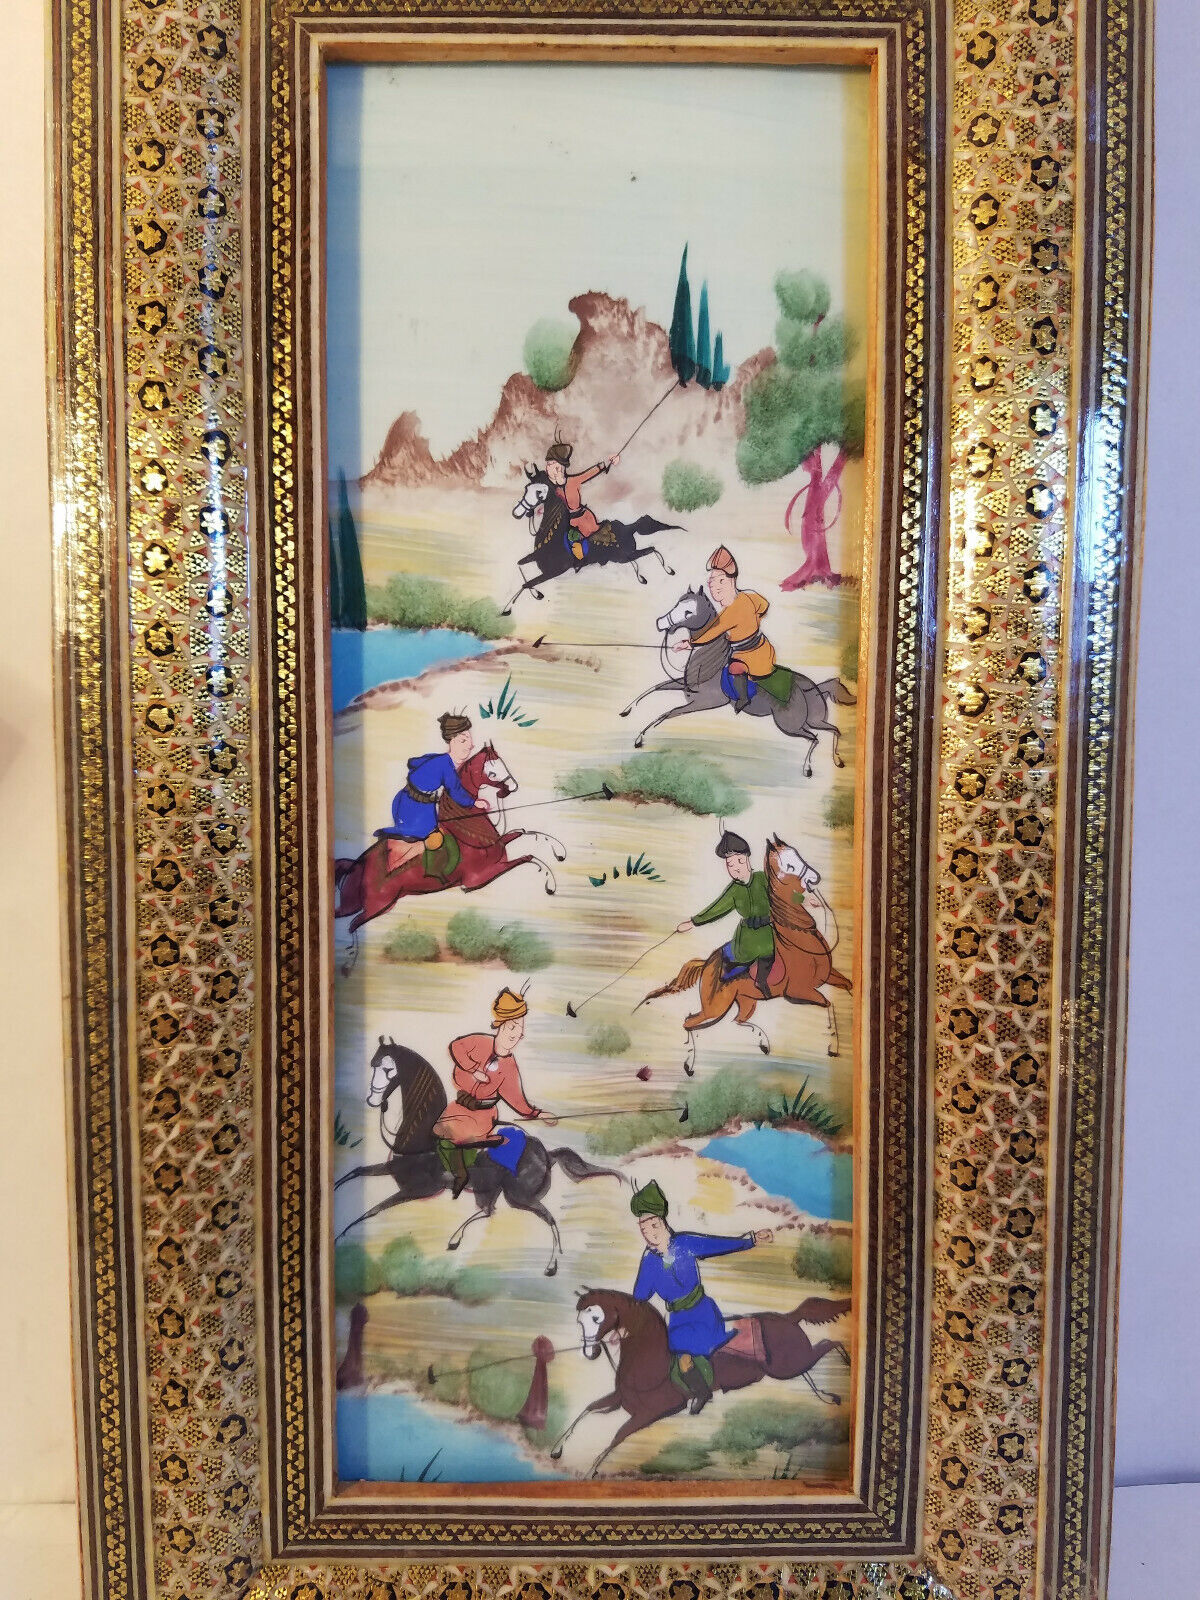 Lot of 2 Vintage Persian Equestrian Paintings in Wooden Khatam Inlay Frames Без бренда - фотография #8